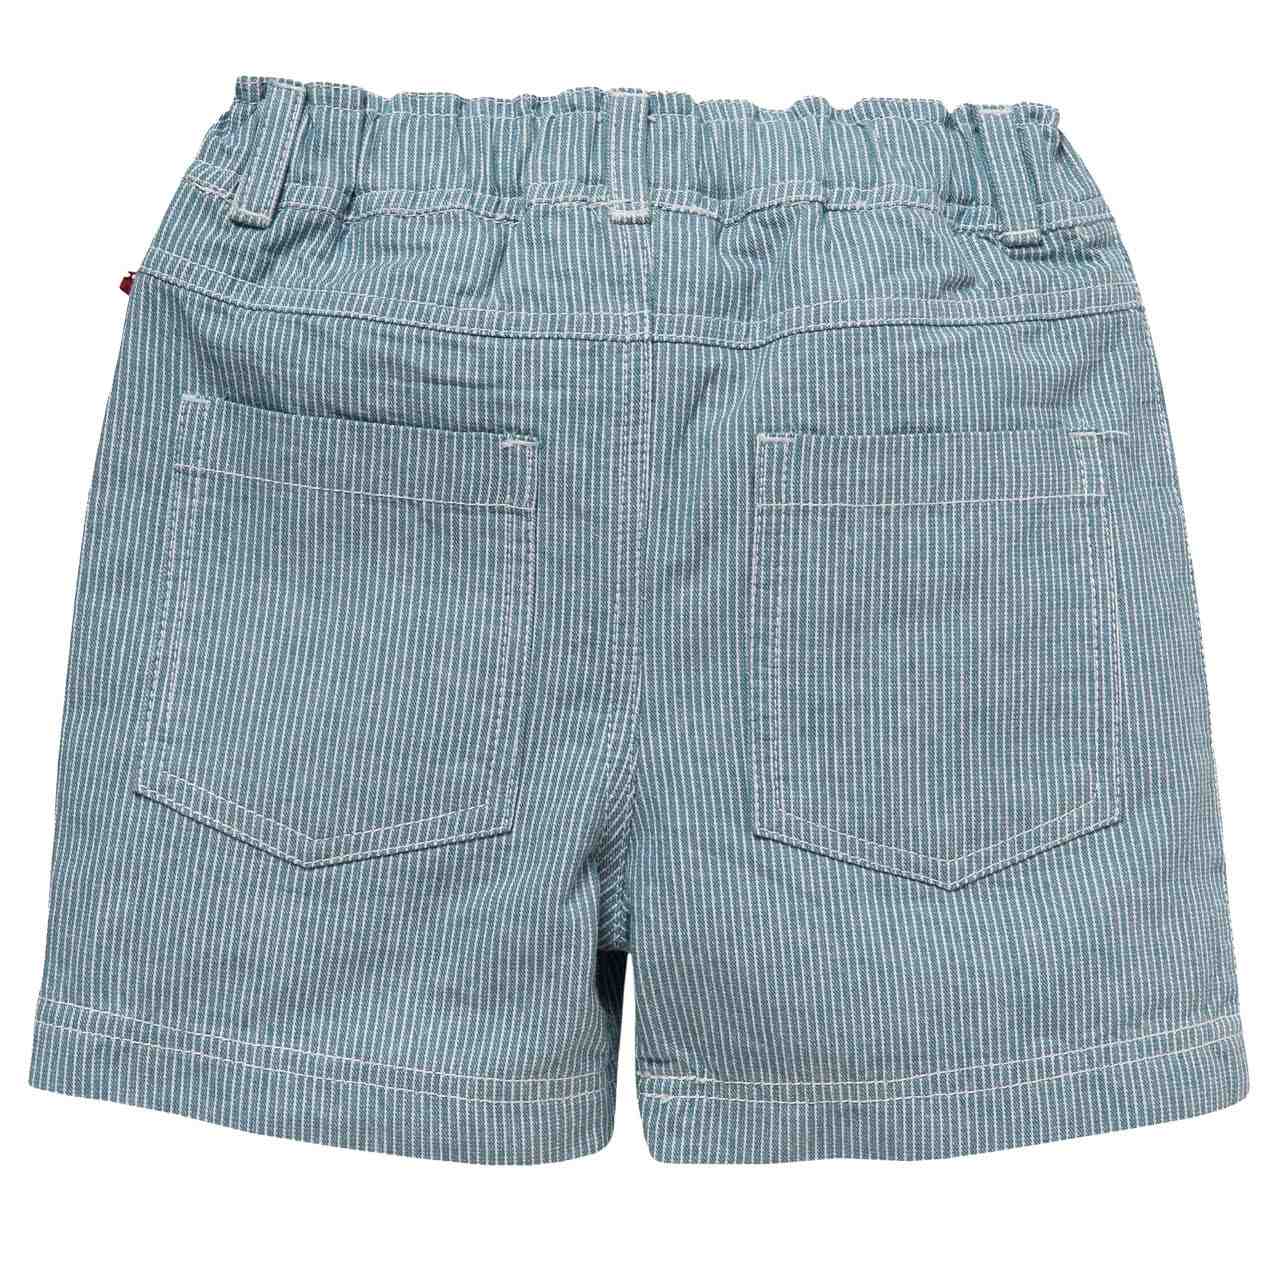 Baumwoll Shorts jeansblau gestreift